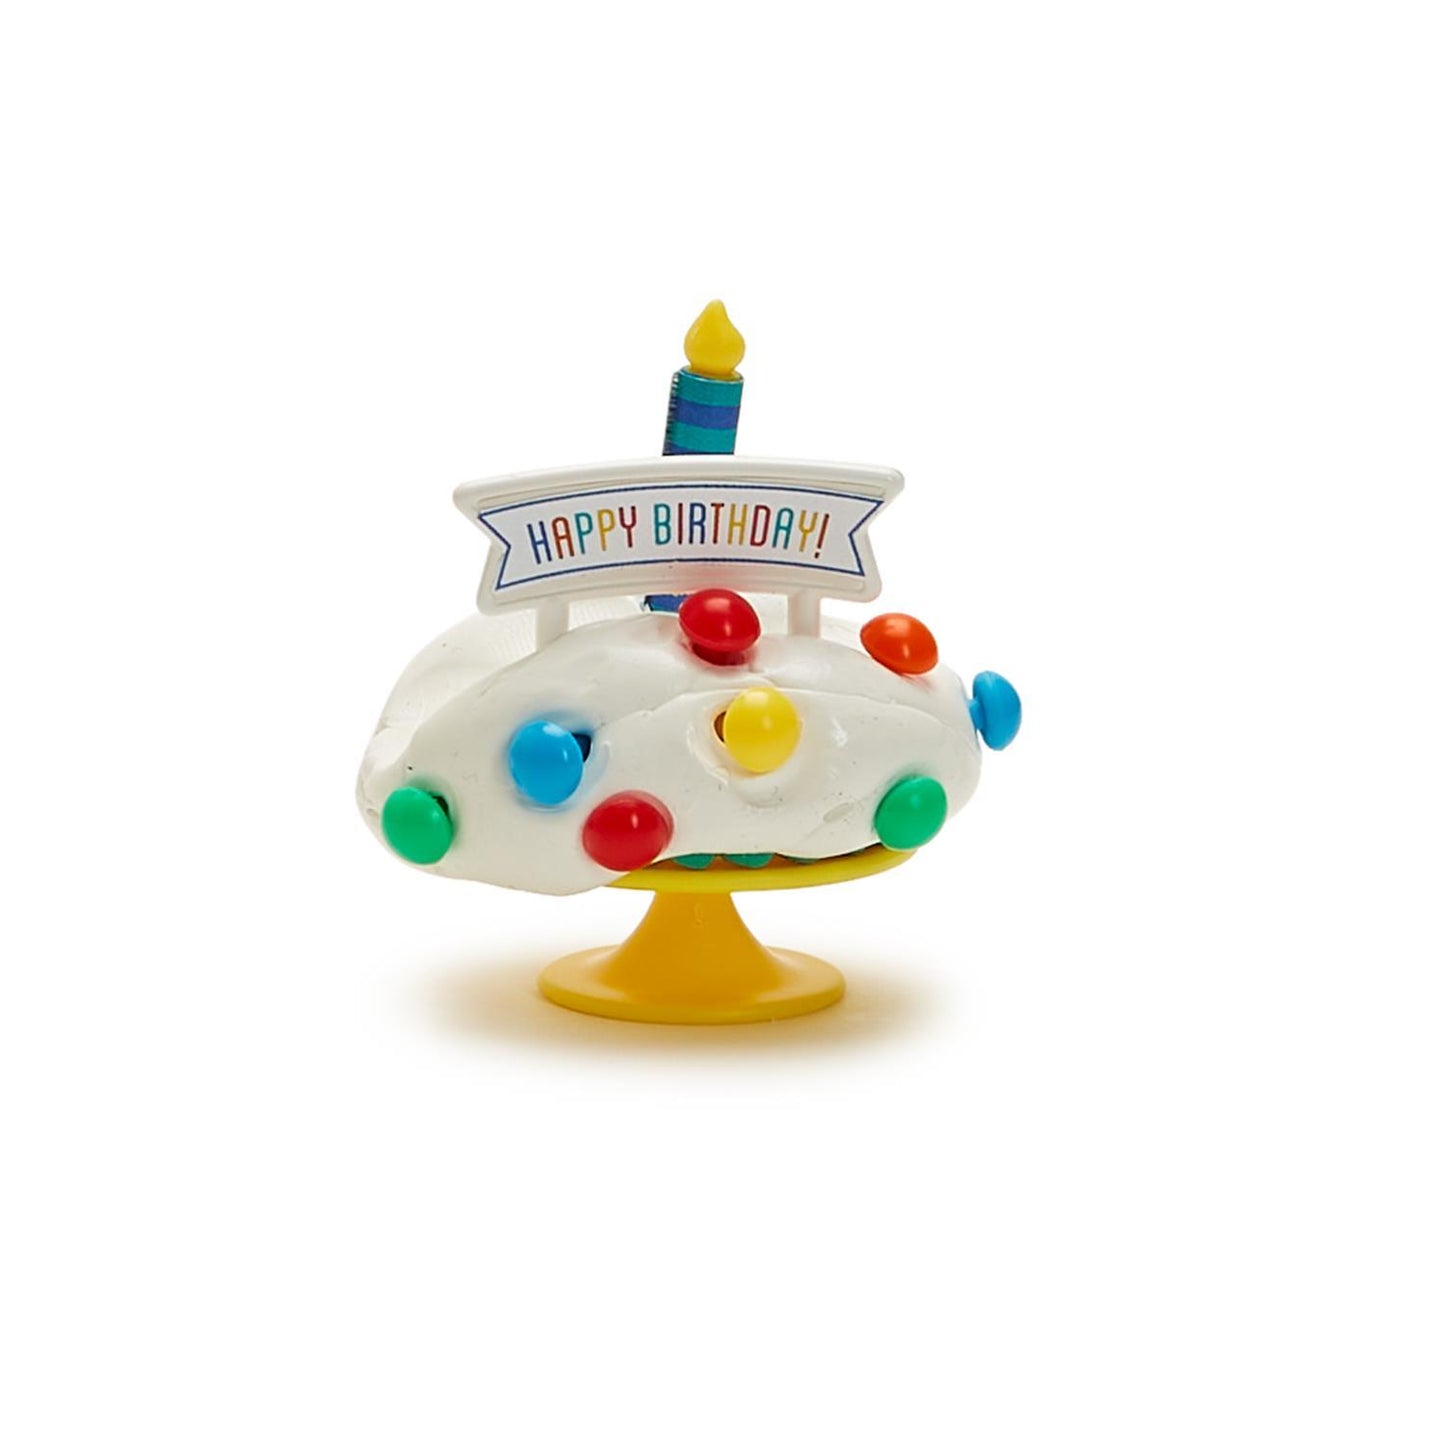 The Original Melting Birthday Cake